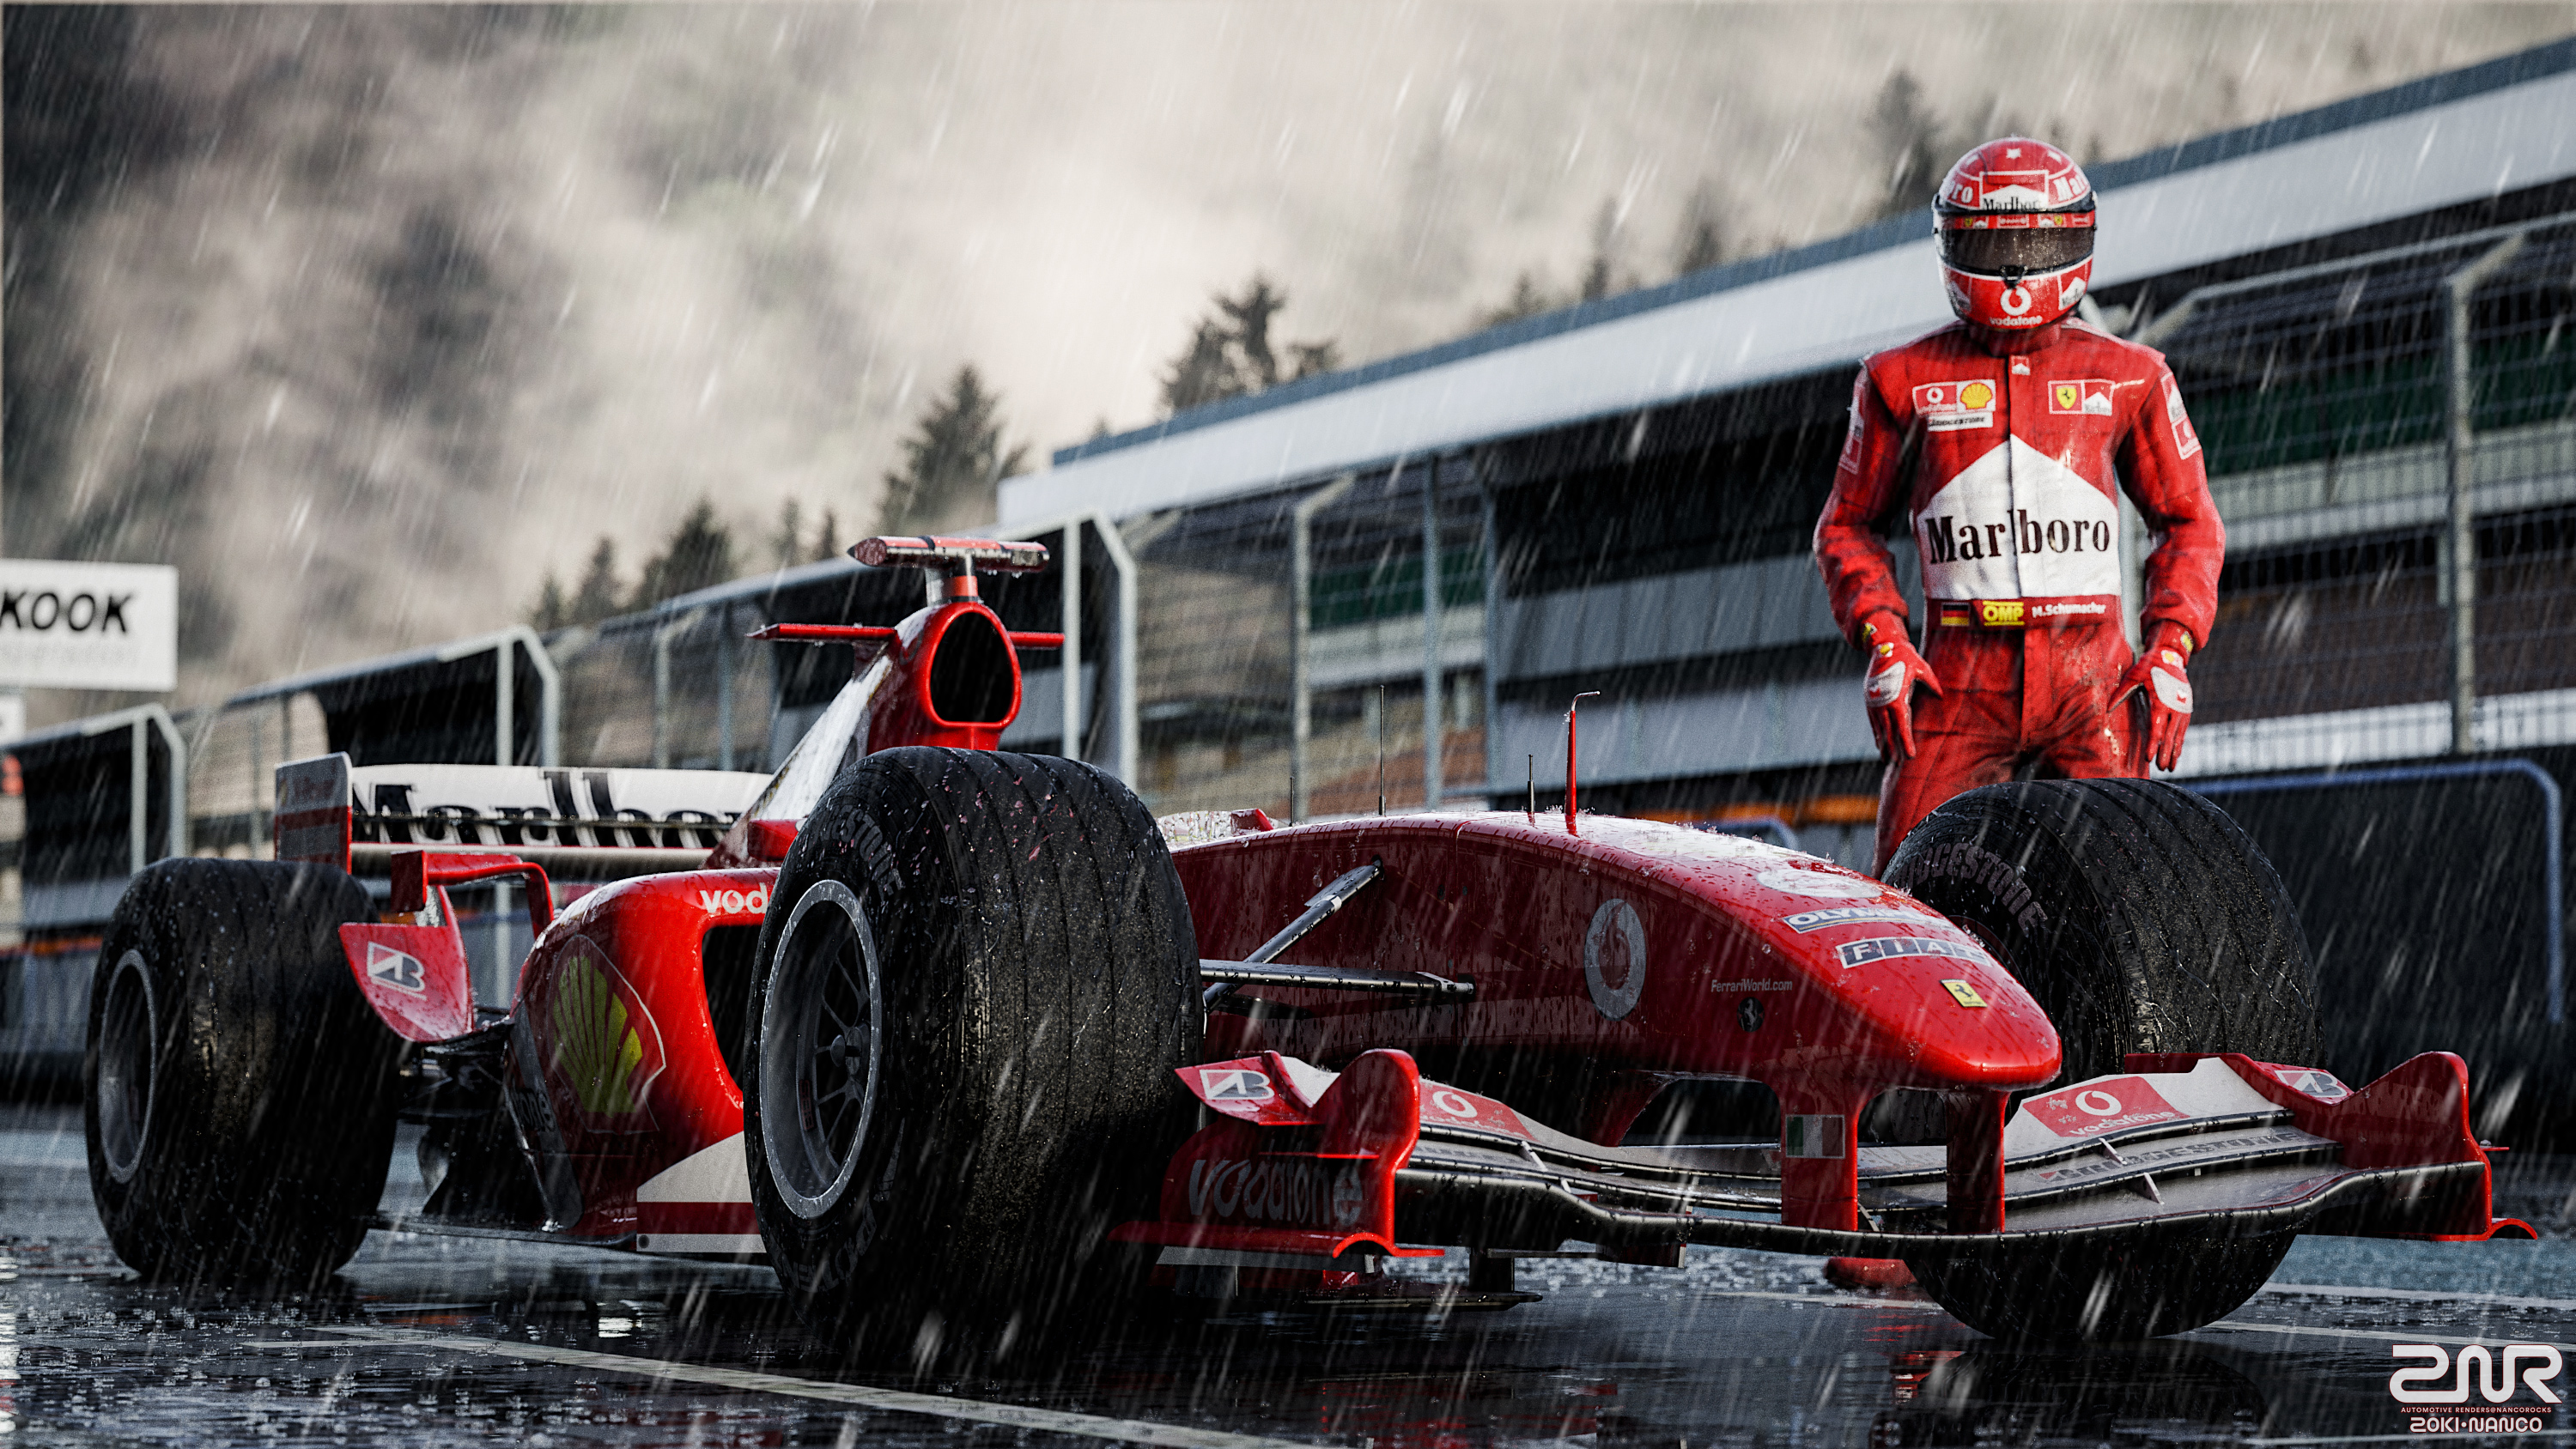 Ferrari F2004 Michael Schumacher, HD Cars, 4k Wallpaper, Image, Background, Photo and Picture